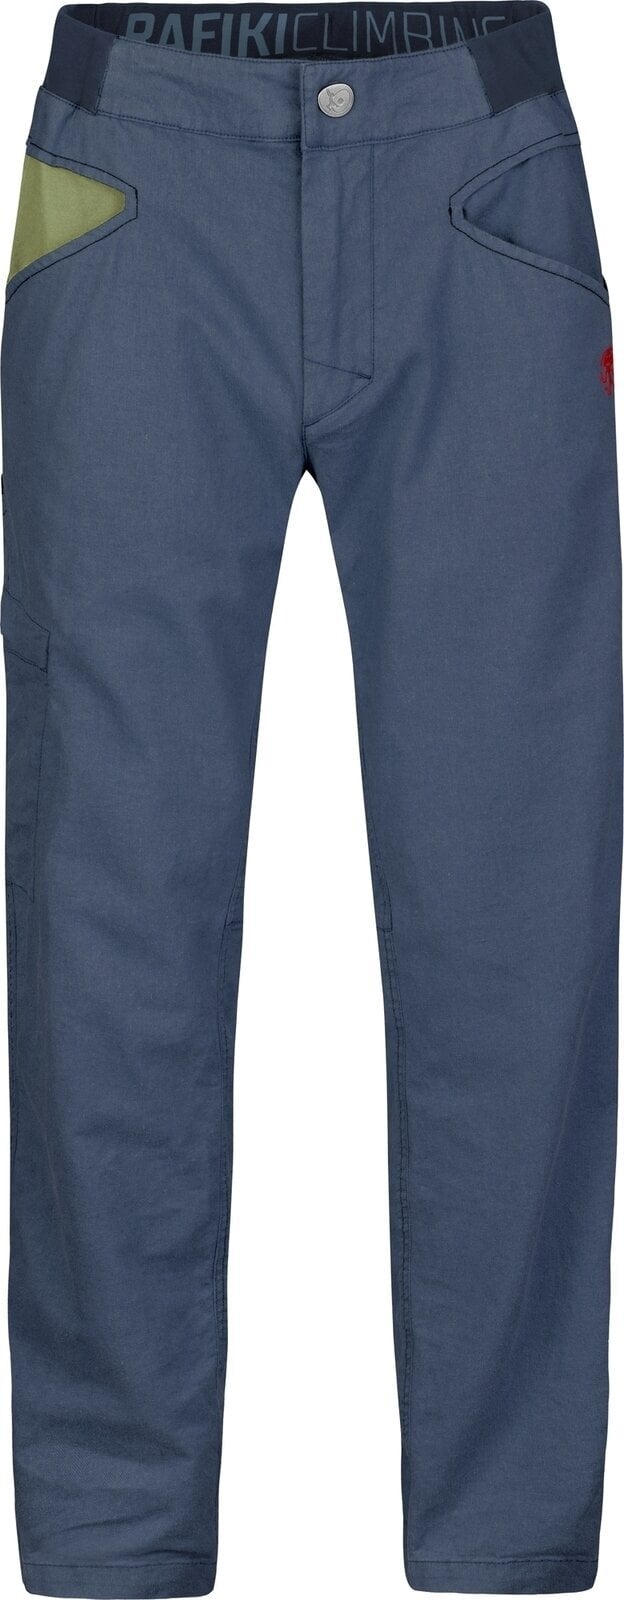 Outdoor Pants Rafiki Grip Man Pants India Ink L Outdoor Pants